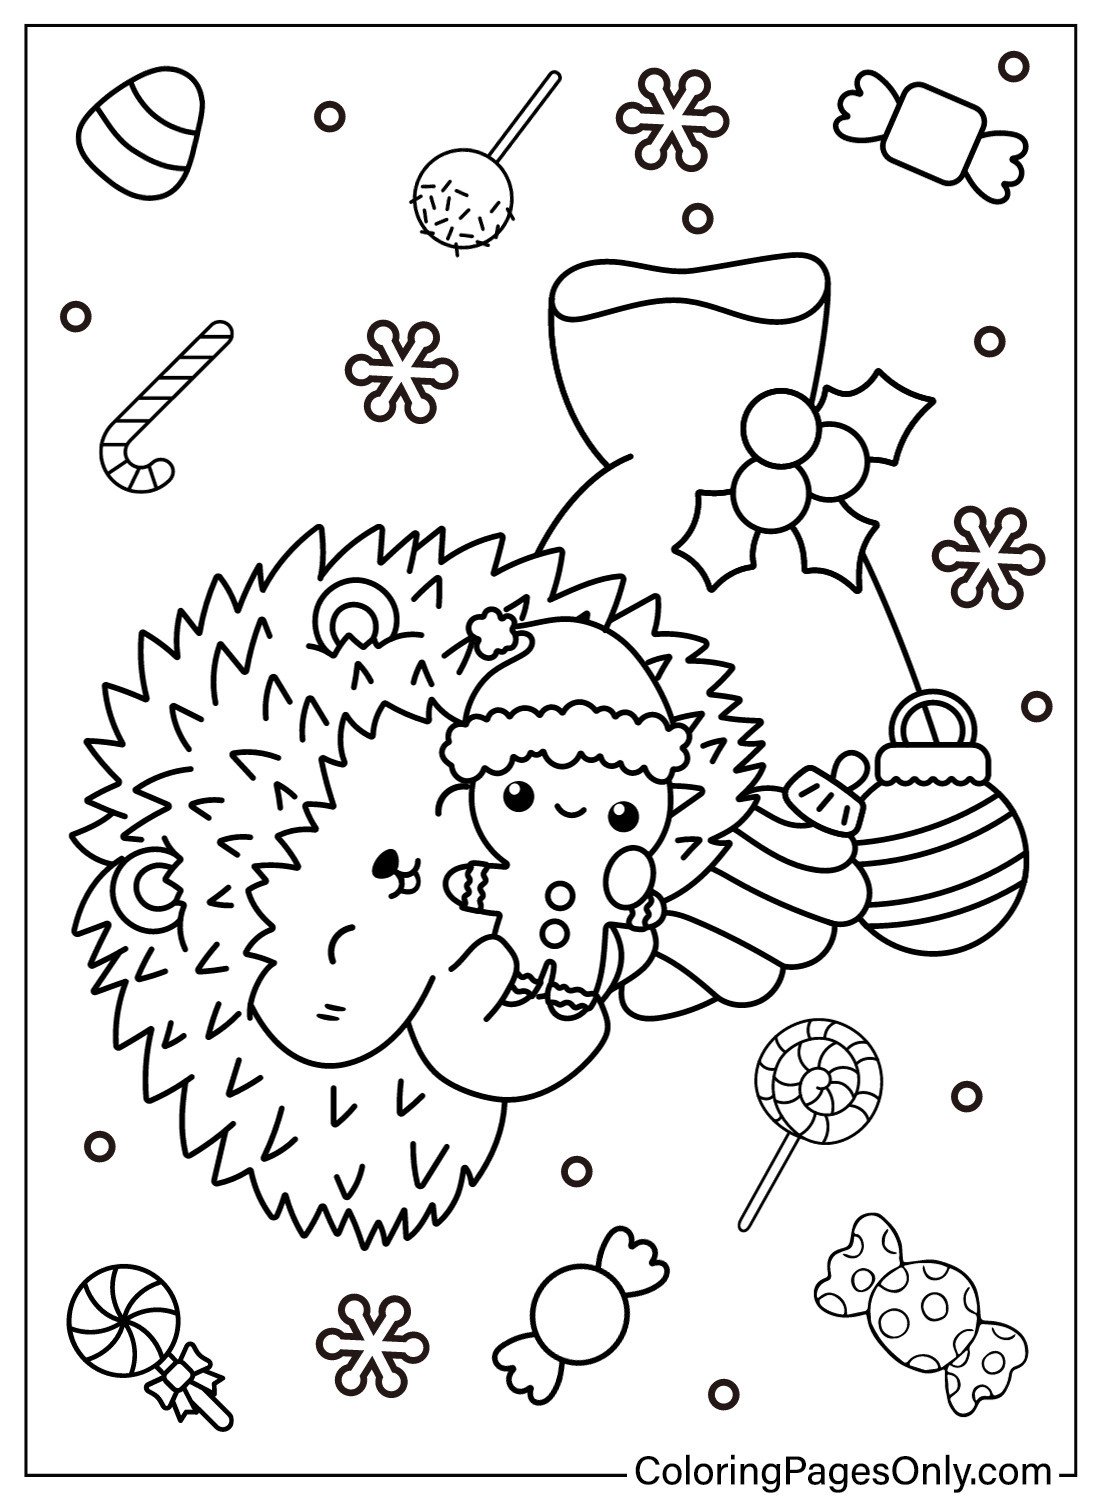 Dibujos para colorear de erizo navideño de animales navideños